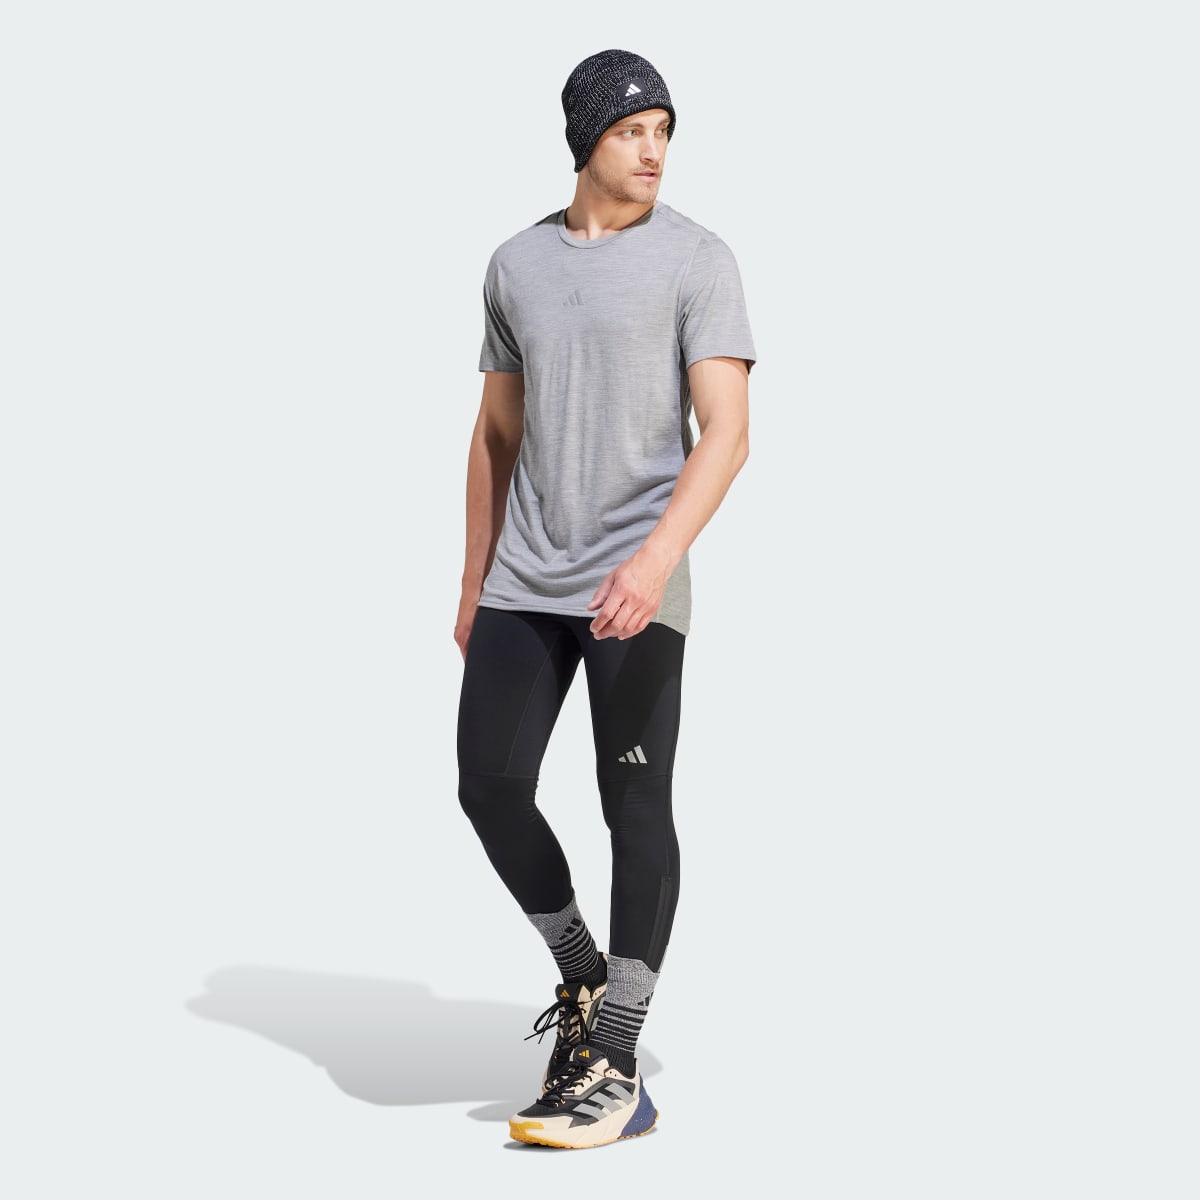 Adidas Leggings Quentes para Running AEROREADY Conquer the Elements Ultimate. 5